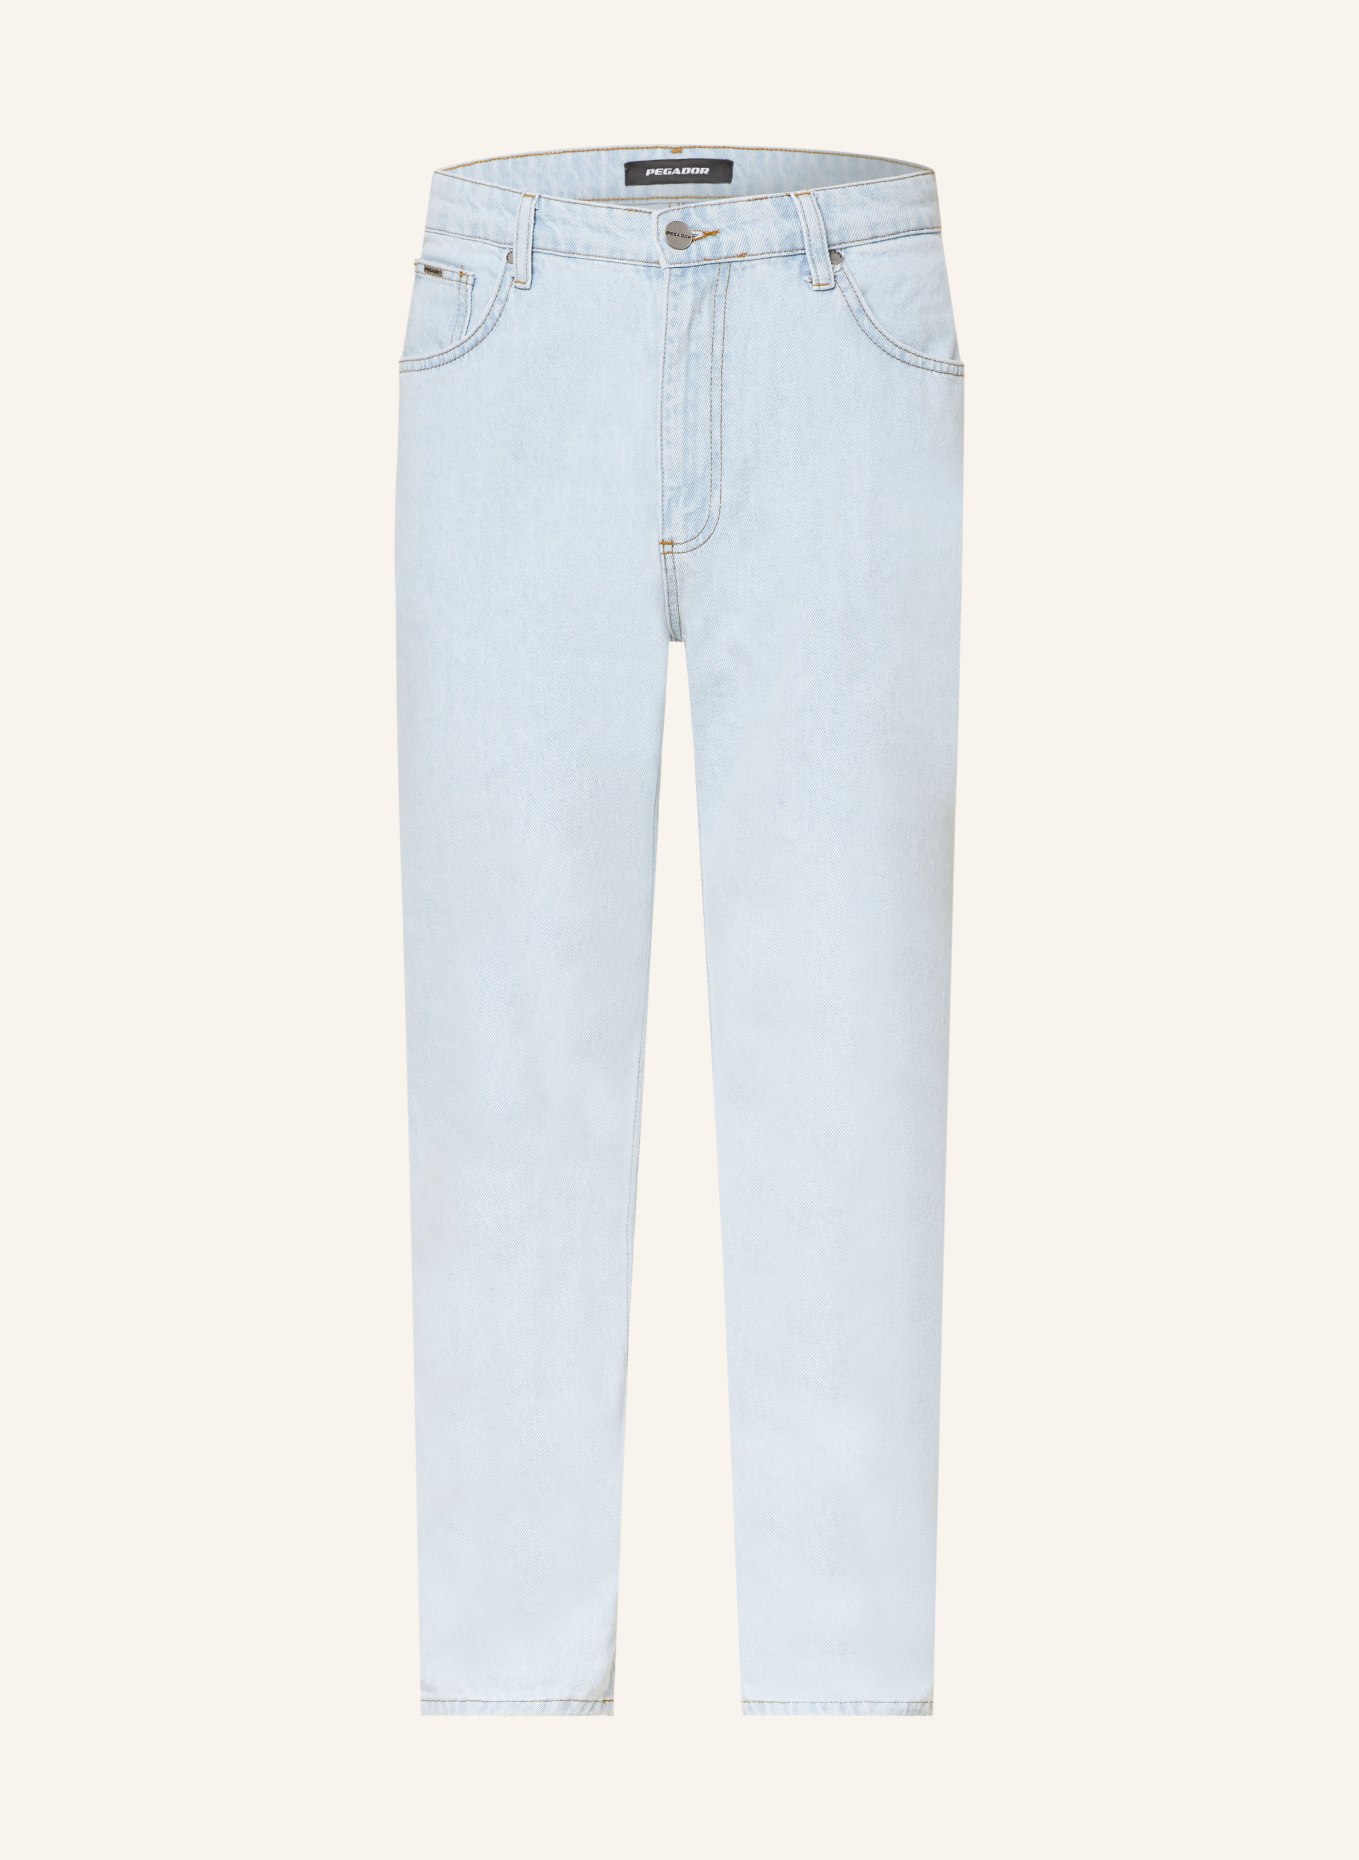 PEGADOR Jeans BALTRA Regular Fit, Farbe: 420 washed cold blue (Bild 1)